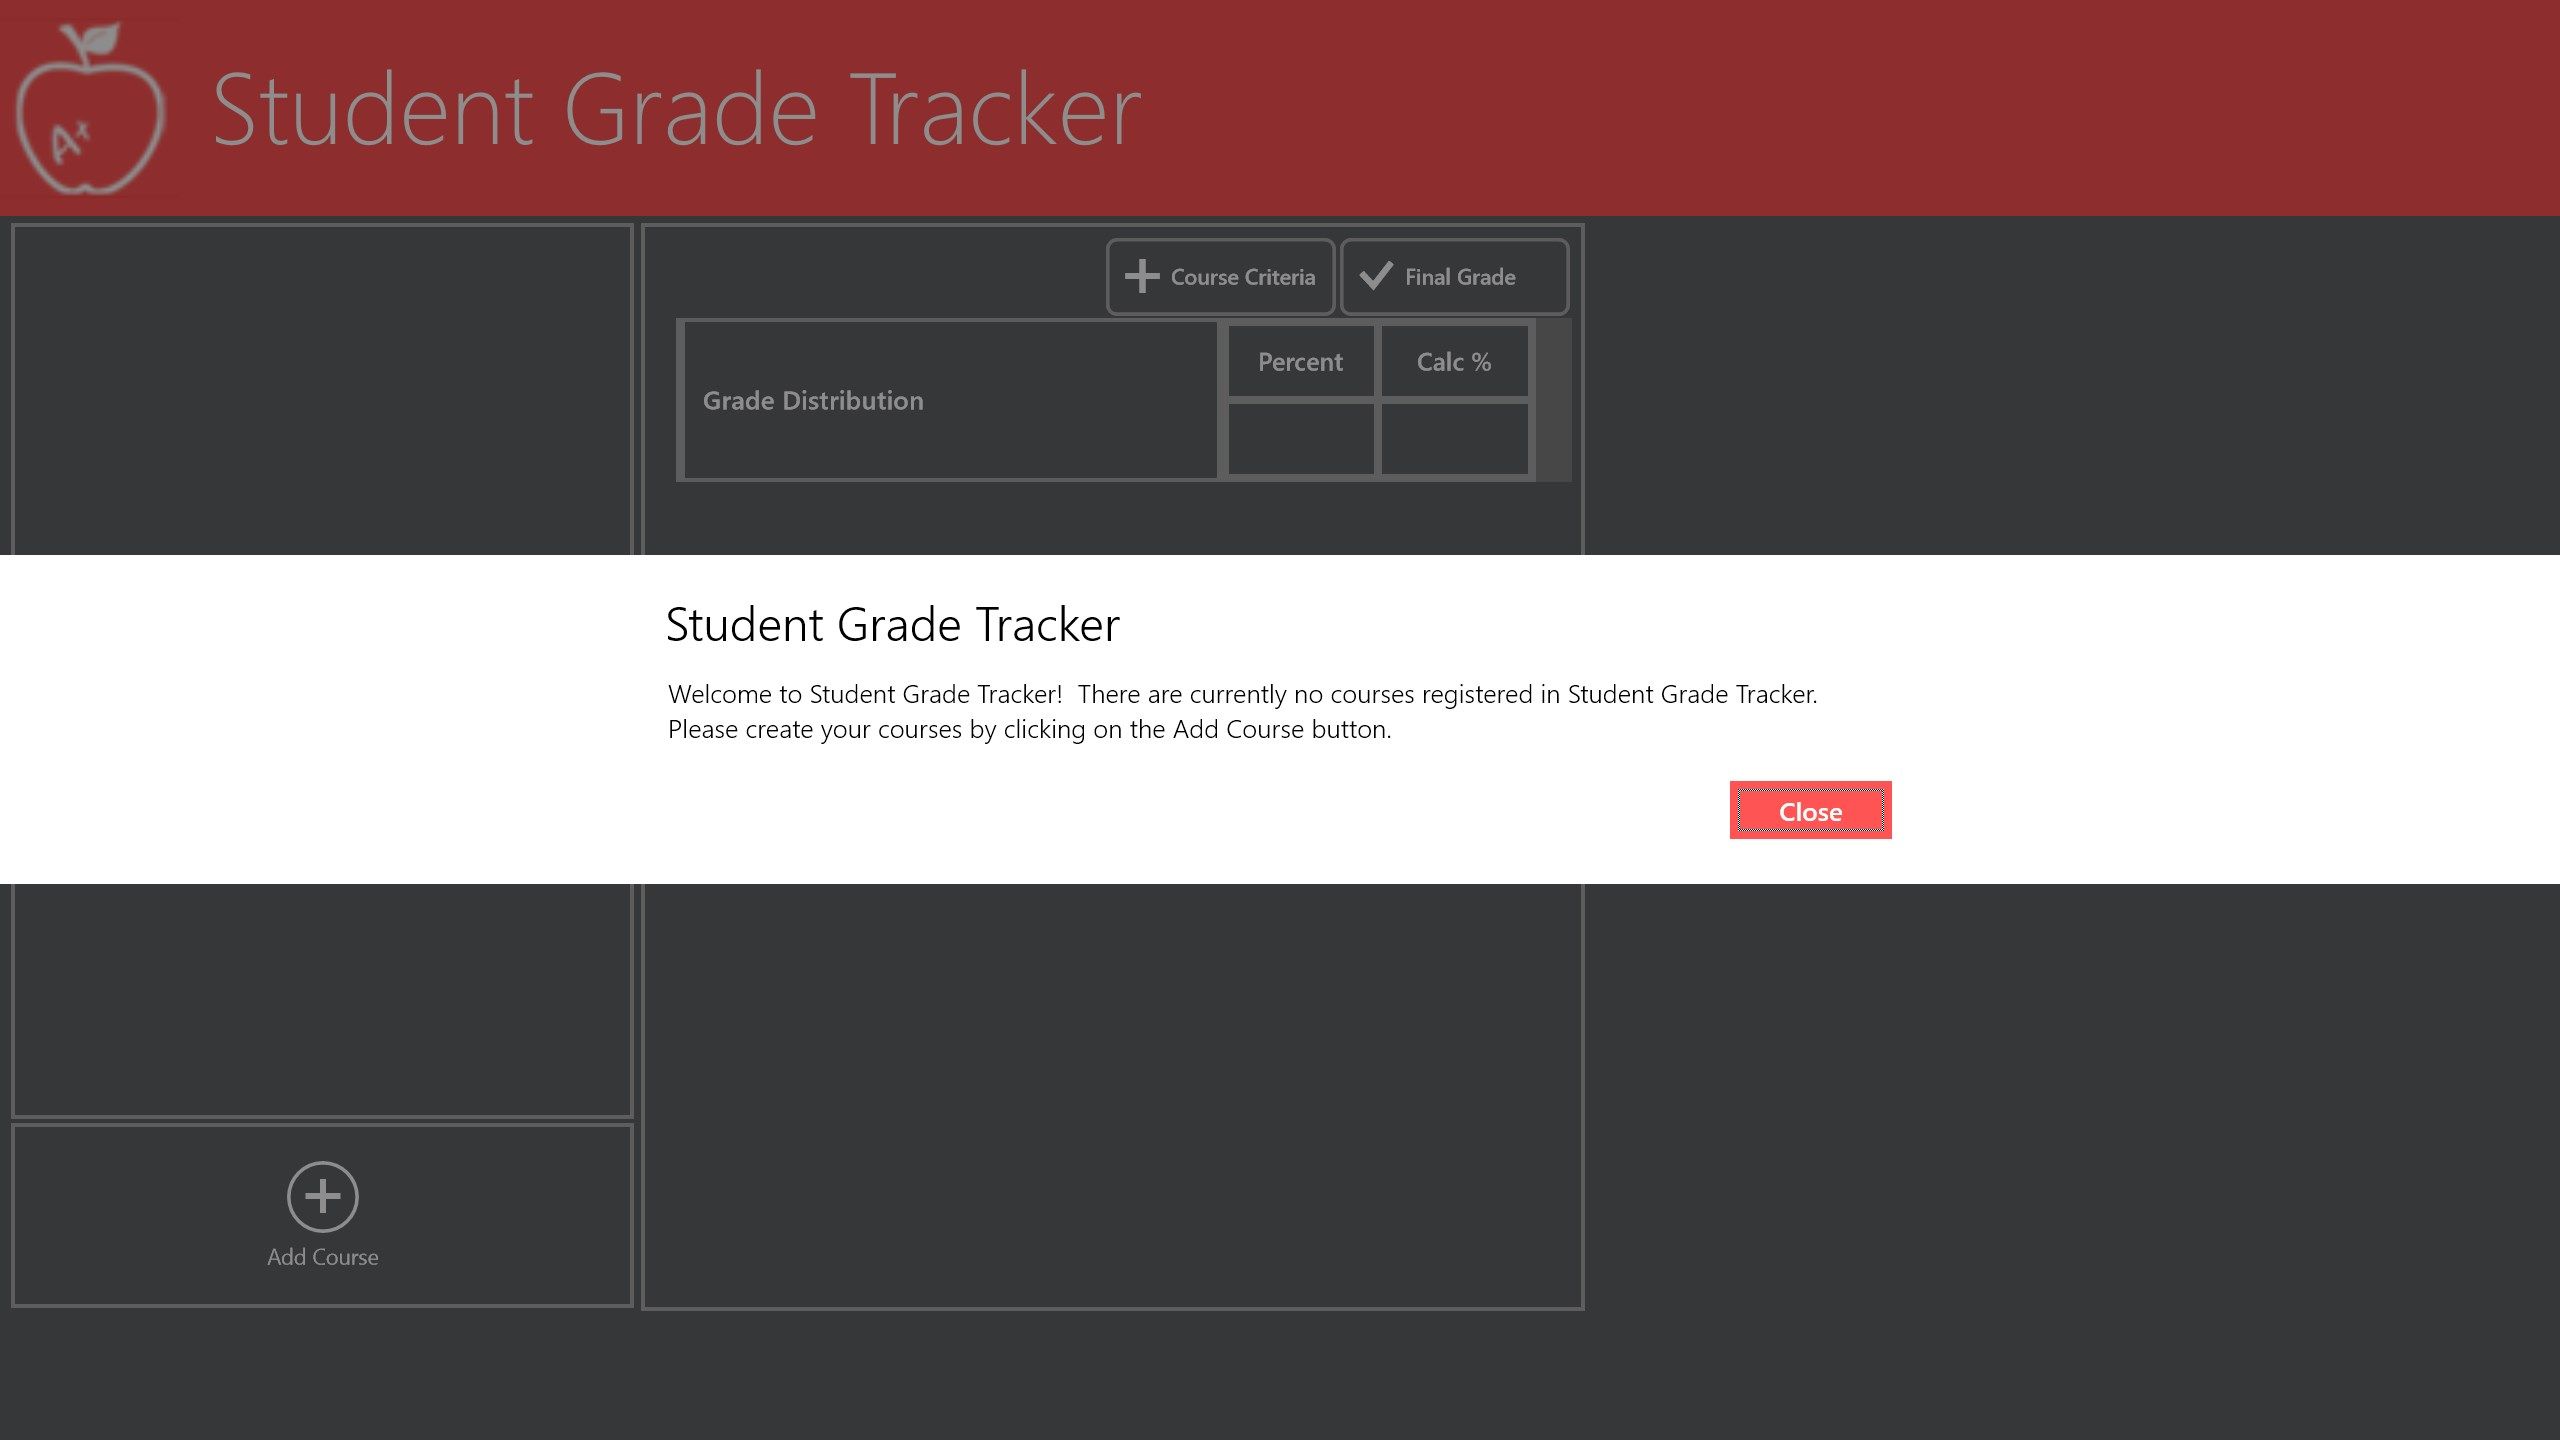 Student Grade Tracker welcome screen